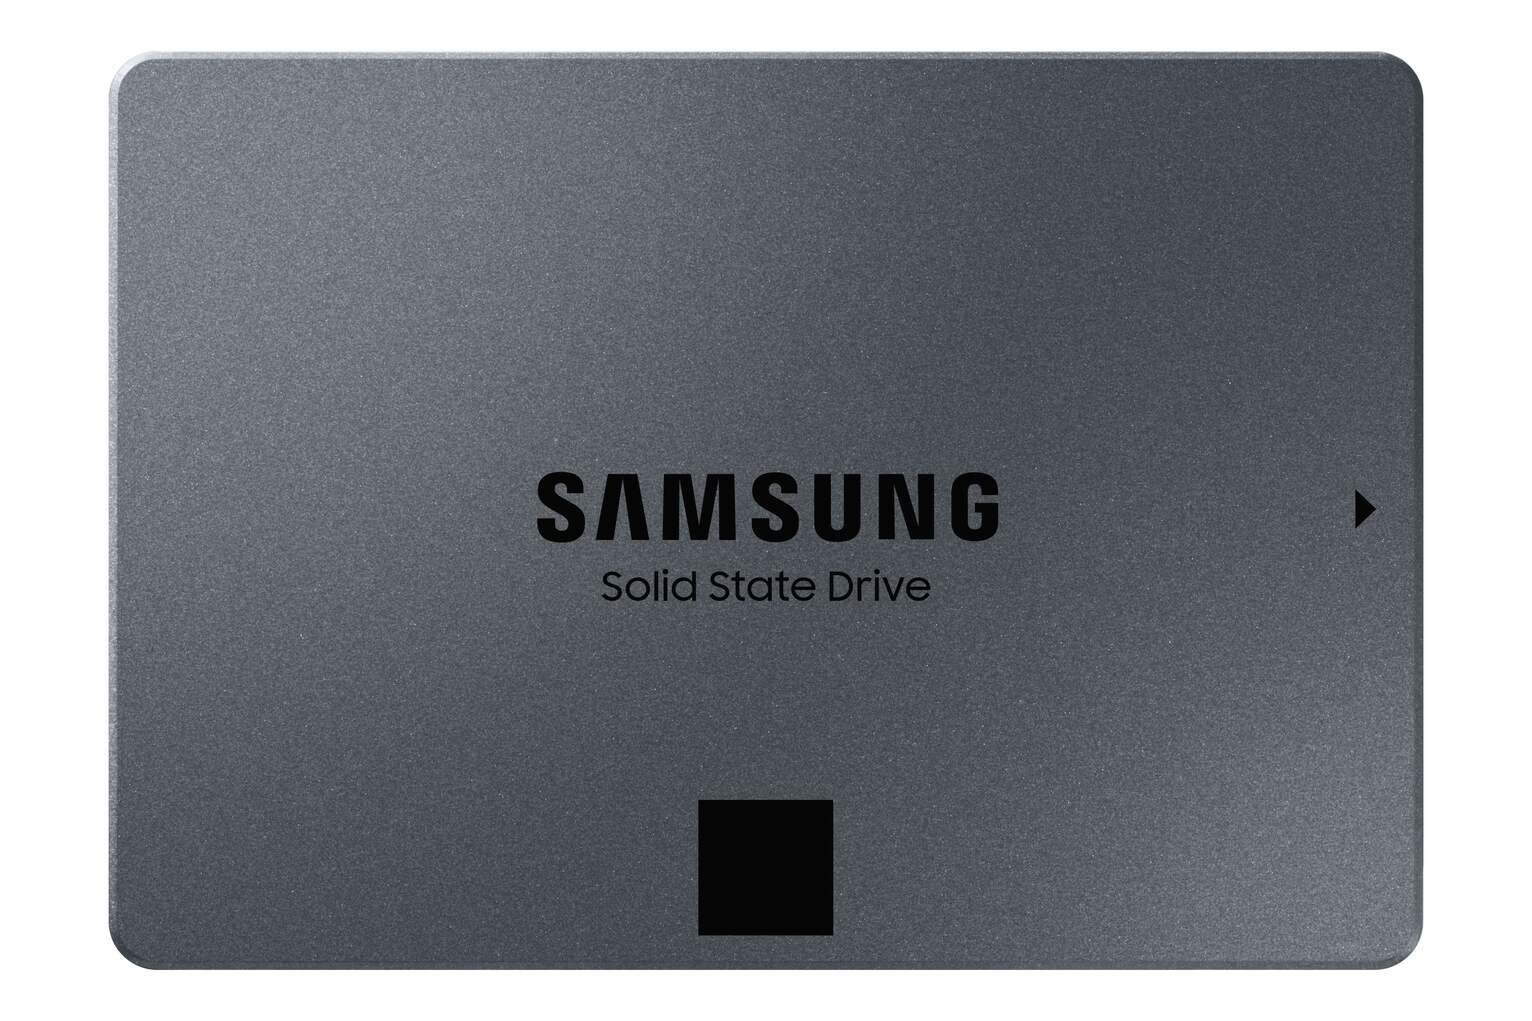 Samsung 870 QVO 1TB SSD Internal Hard Drive Review